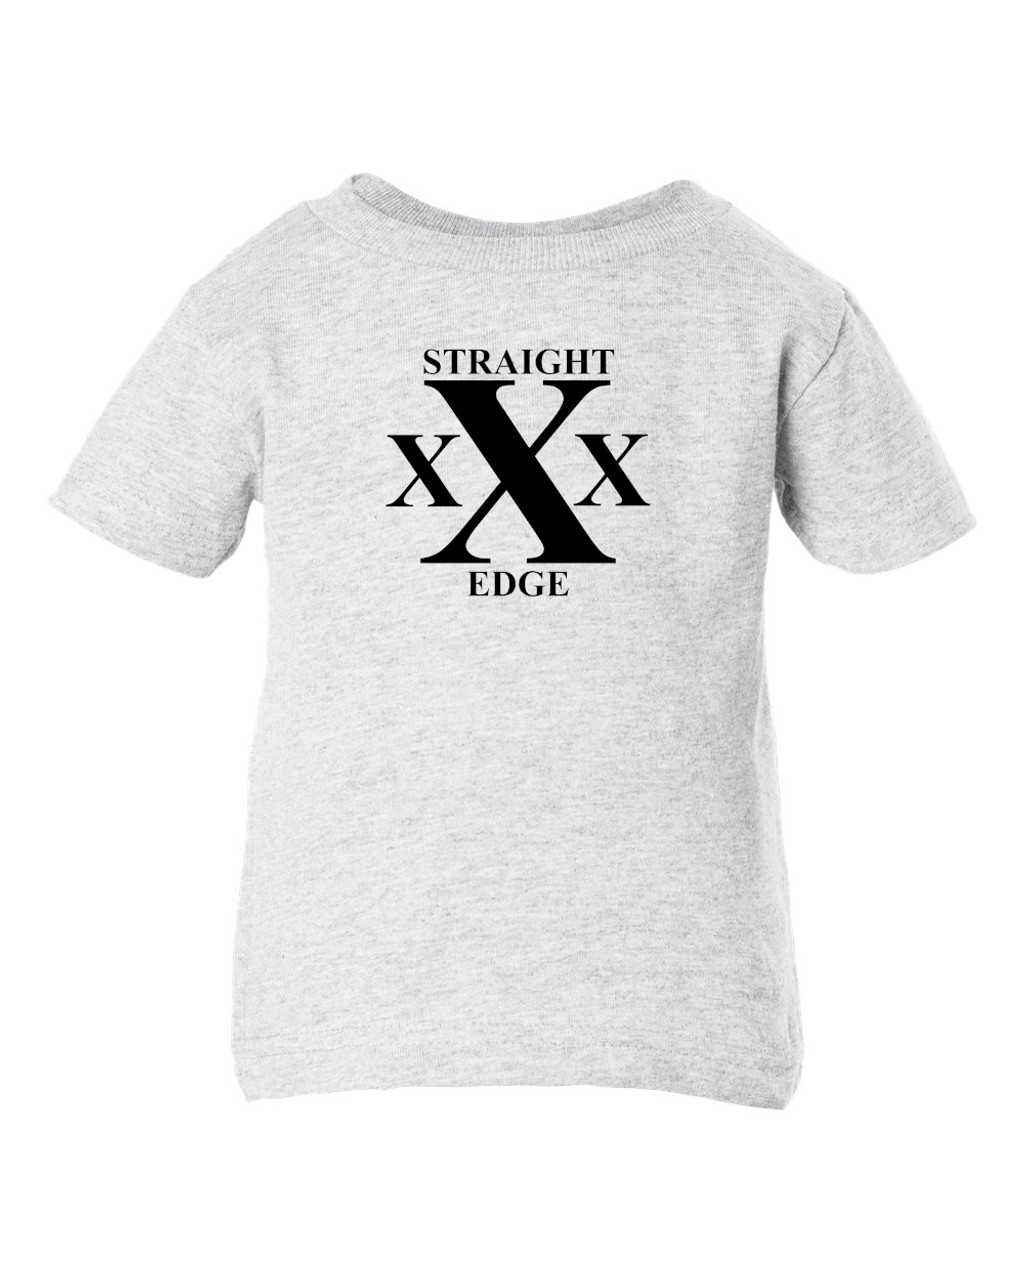 Hardcore Punk Rock Ash Tee Straight Edge Baby & Toddler T-Shirt